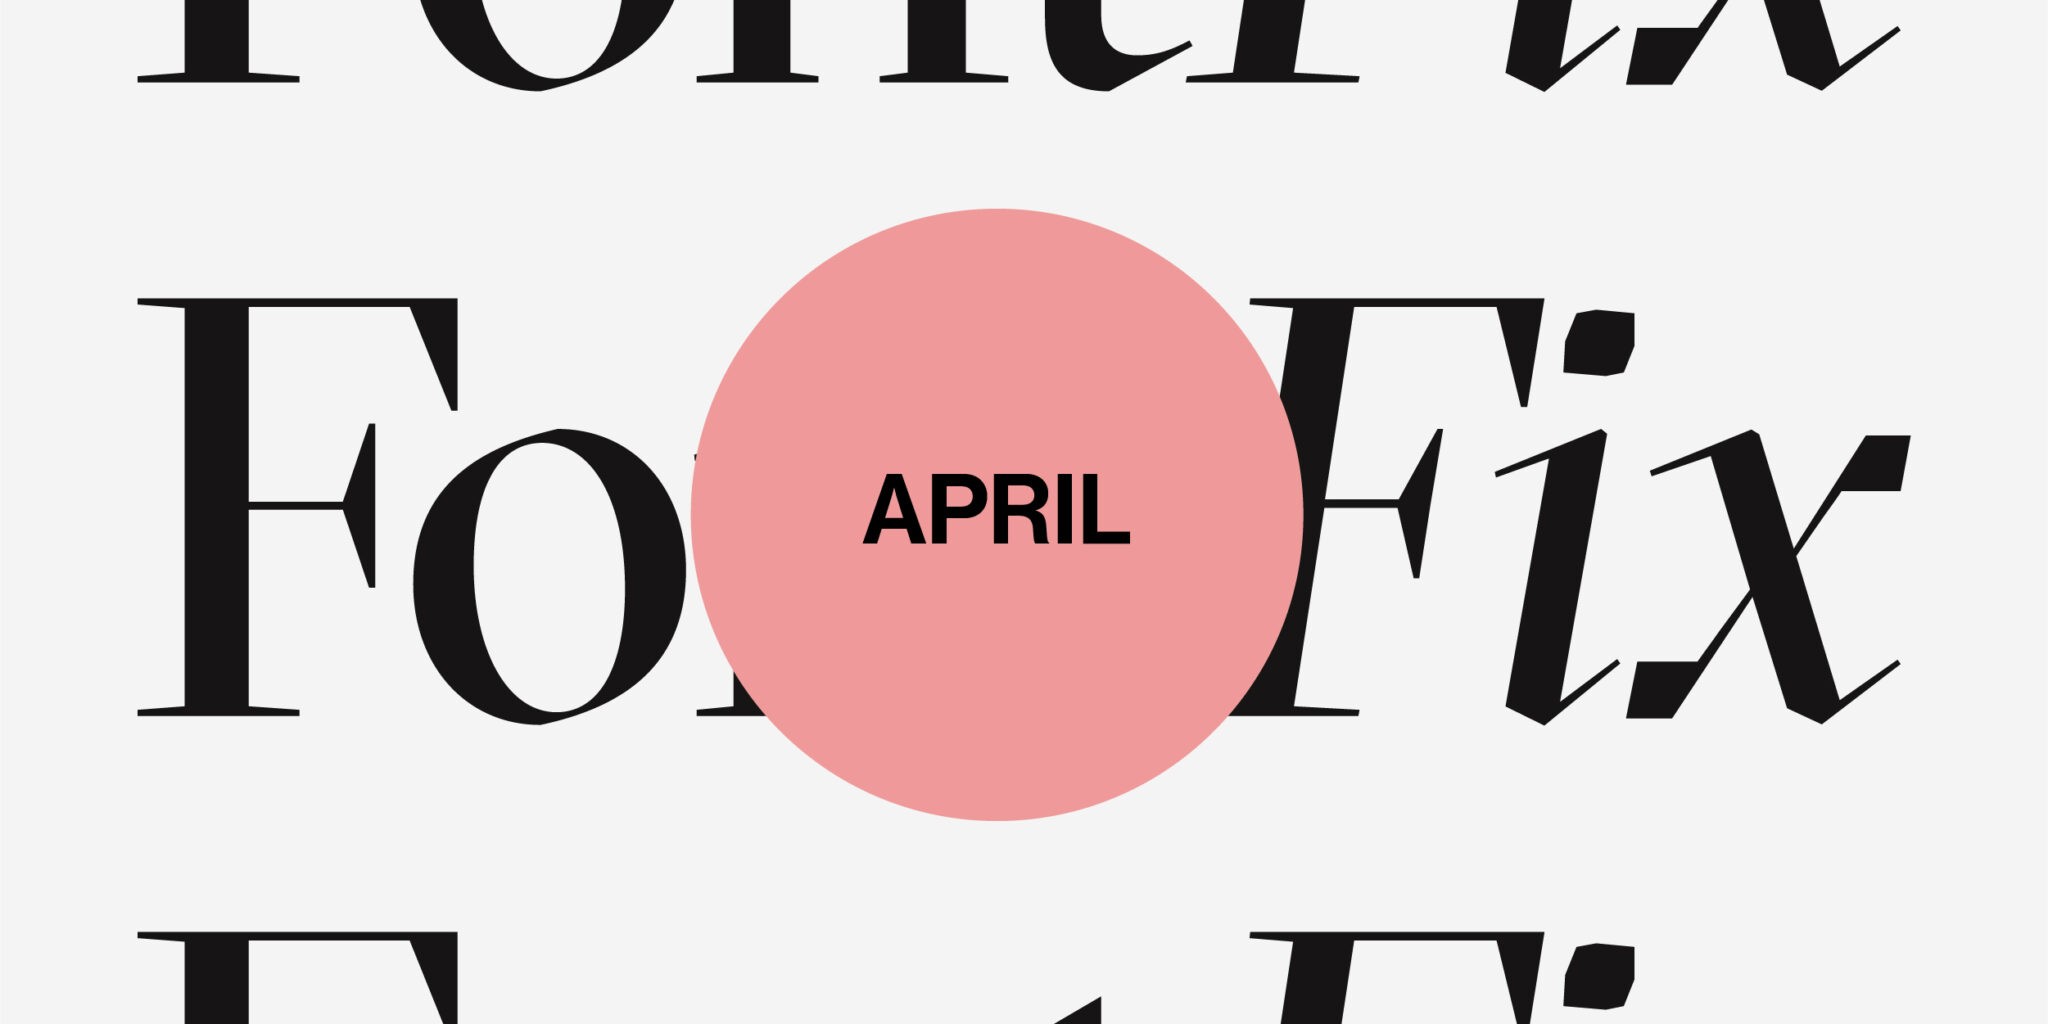 Font Fix series April cover image